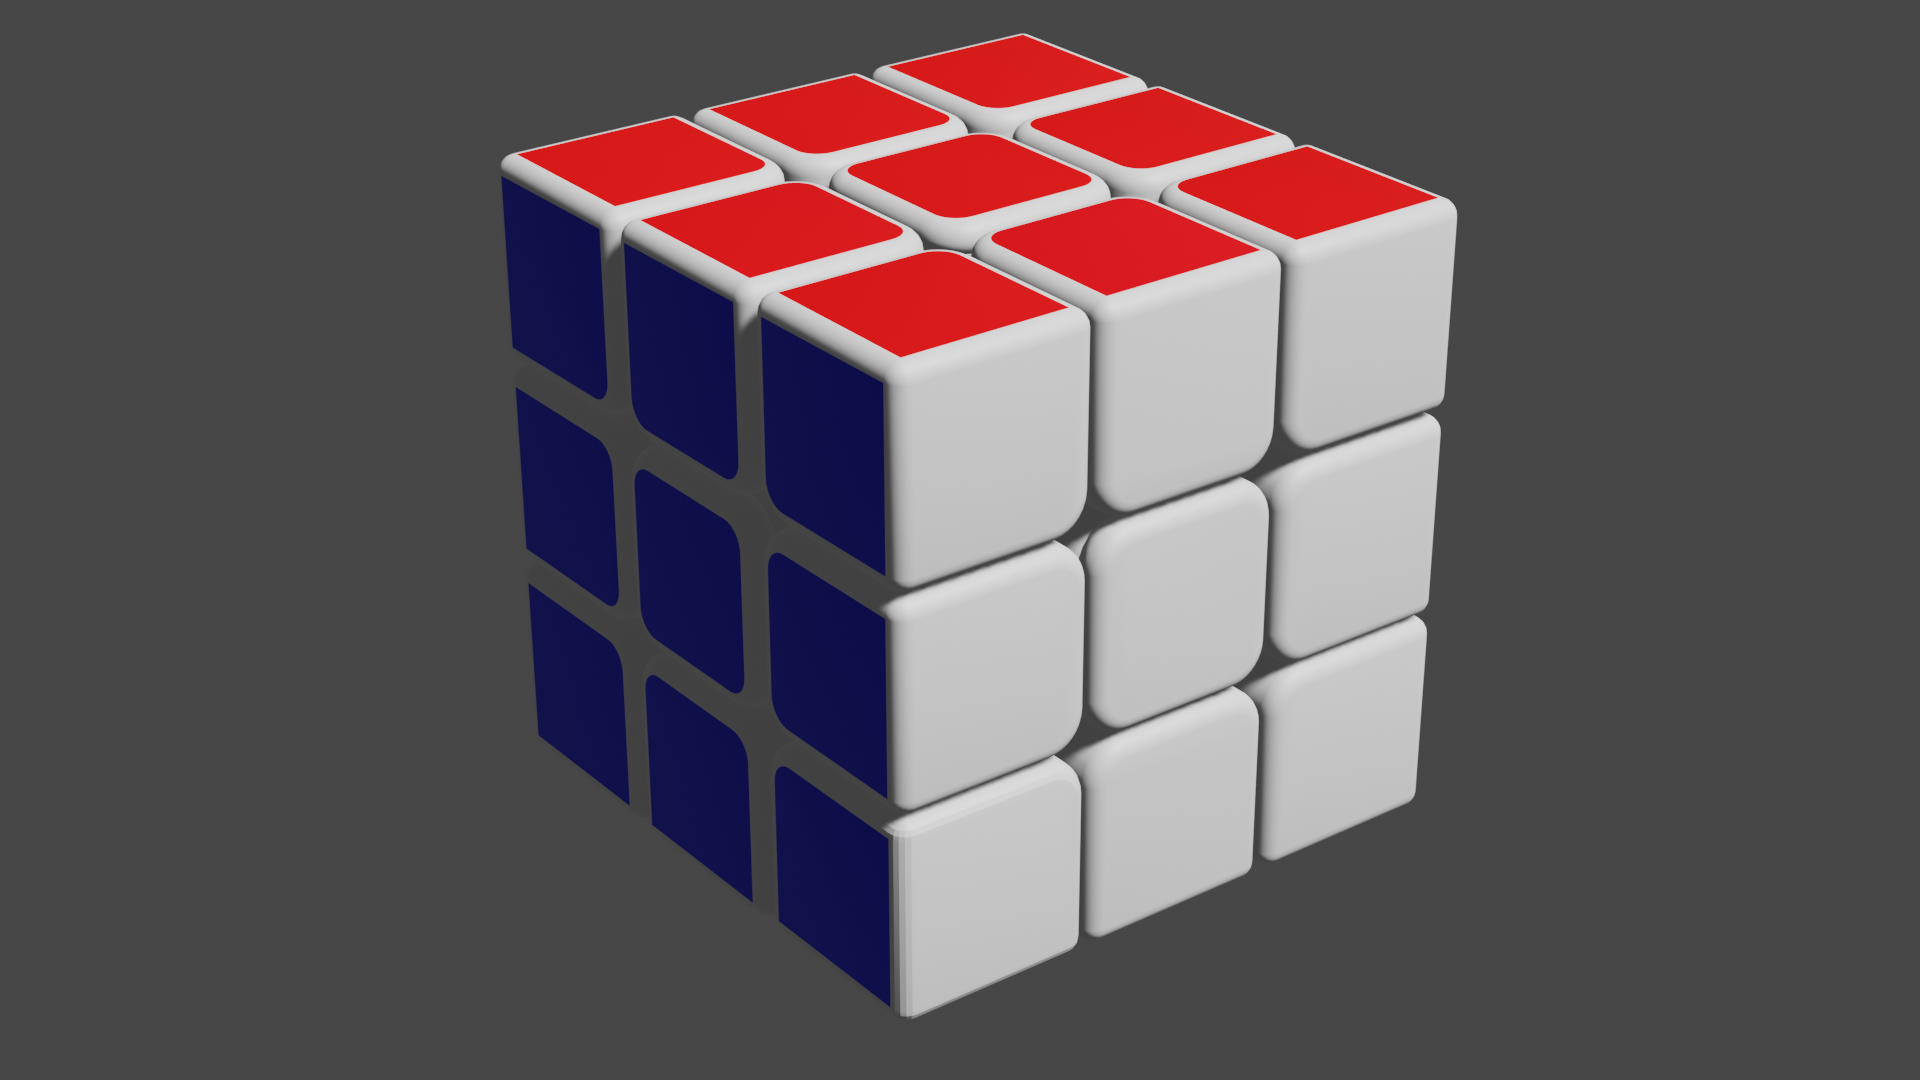 3x3 Fidget Cube "Ruby"